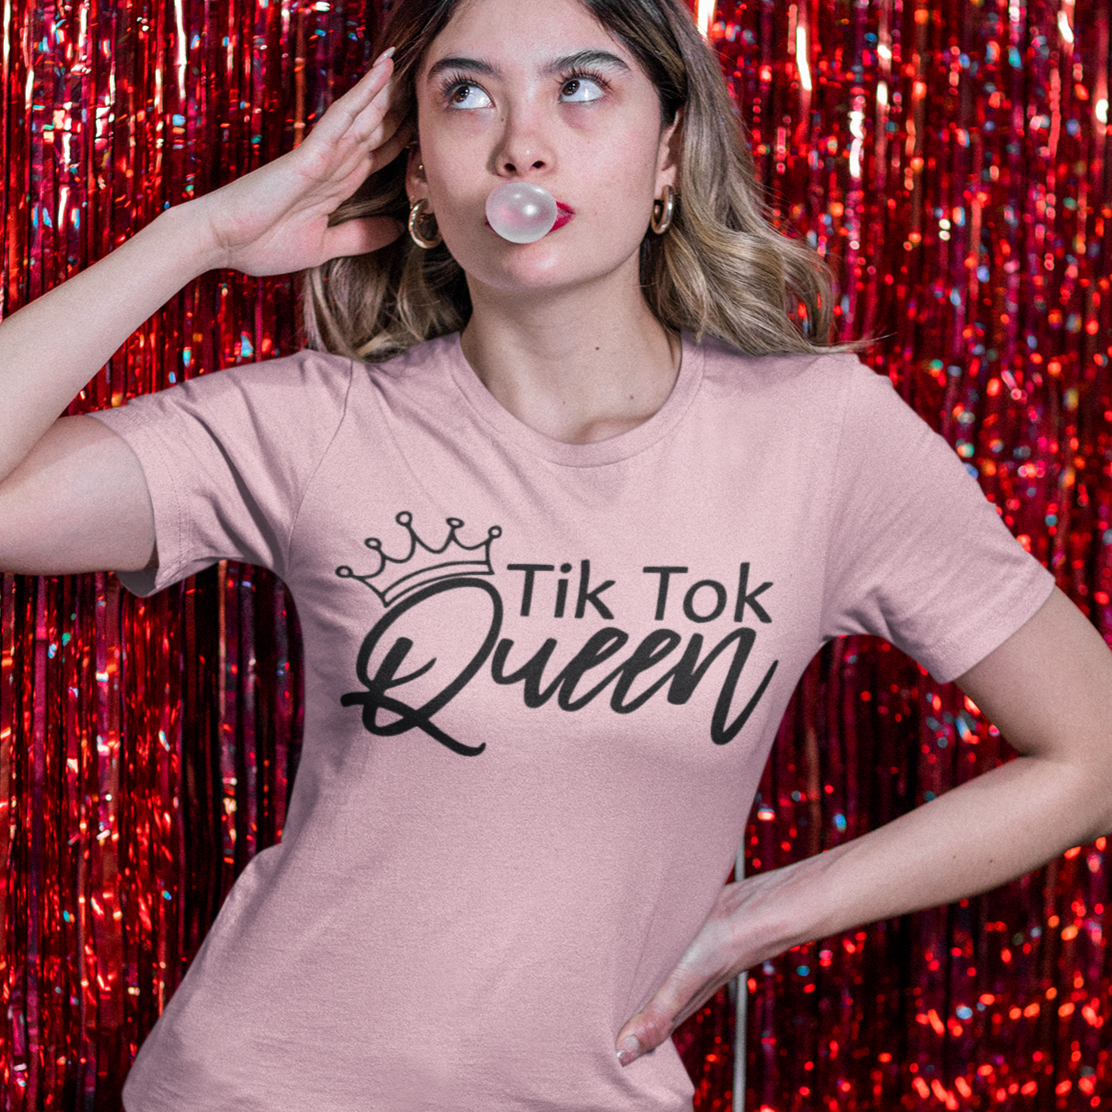 tik-tok-queen-pink-t-shirt-womens-mockup-of-a-woman-chewing-bubblegum